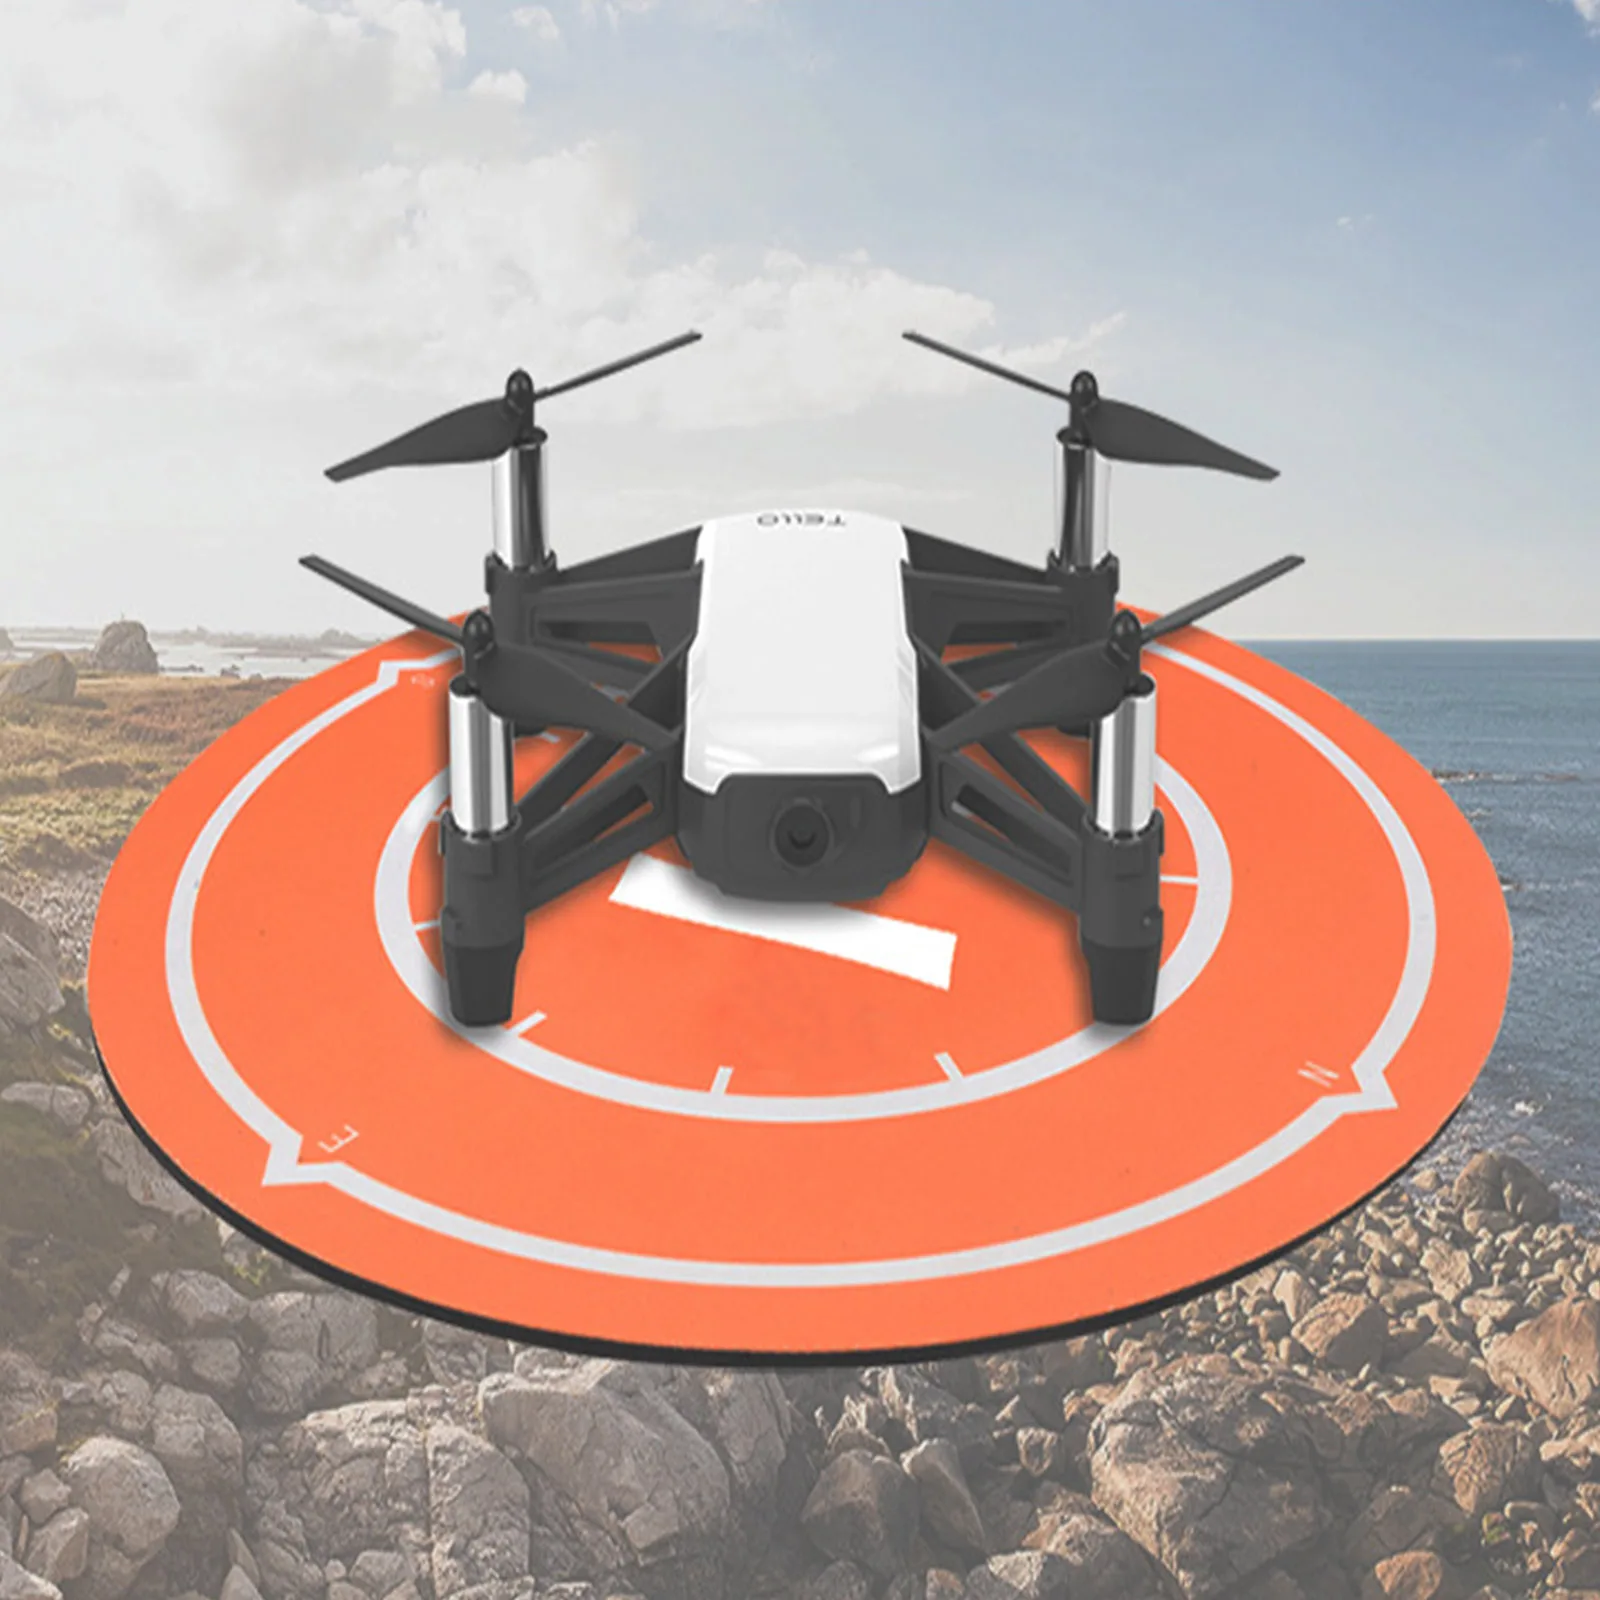 

1PCS Round Foldable Landing Pad Mini 25cm Drone Parking Apron Pad for Mini 3 Pro/2/SE/Spark/Mavic Air Drone Accessories Cup Pad